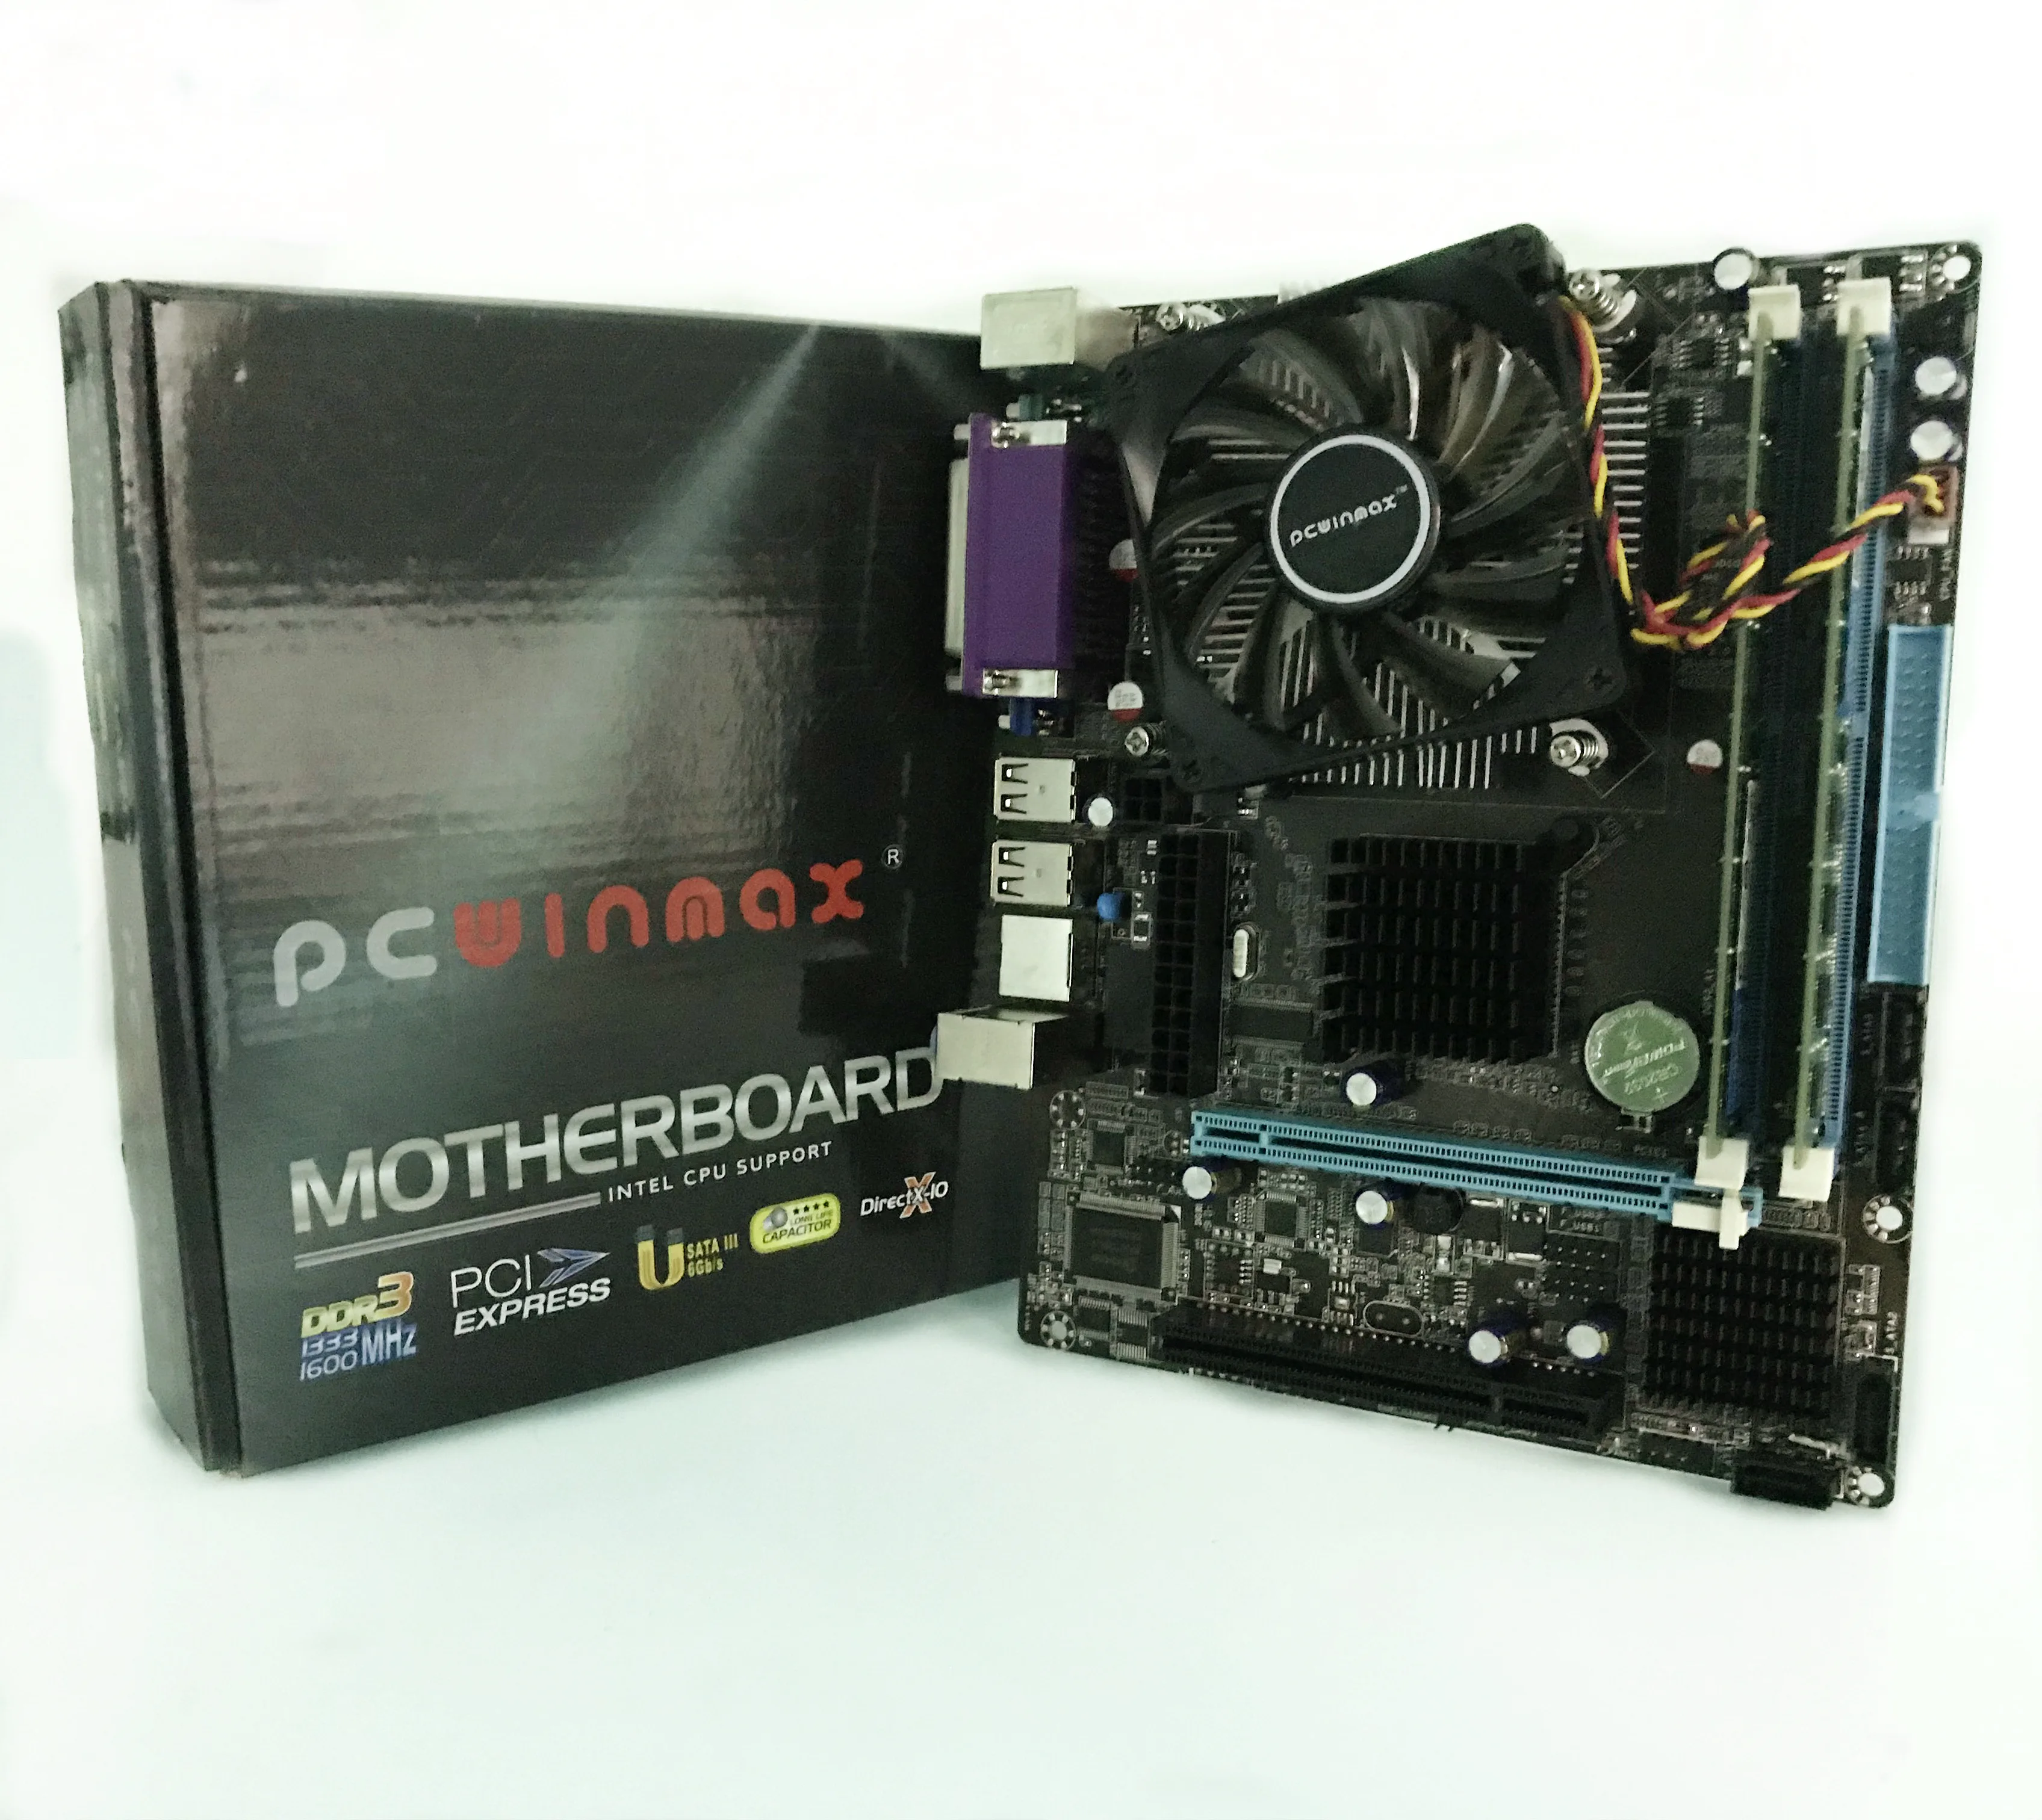 PCWINMAX комплект материнской платы. Материнская плата LGA 775/771 G31 с процессором E5xxx. Оперативная память DDR2 2G x 2R(4G), вентилятор